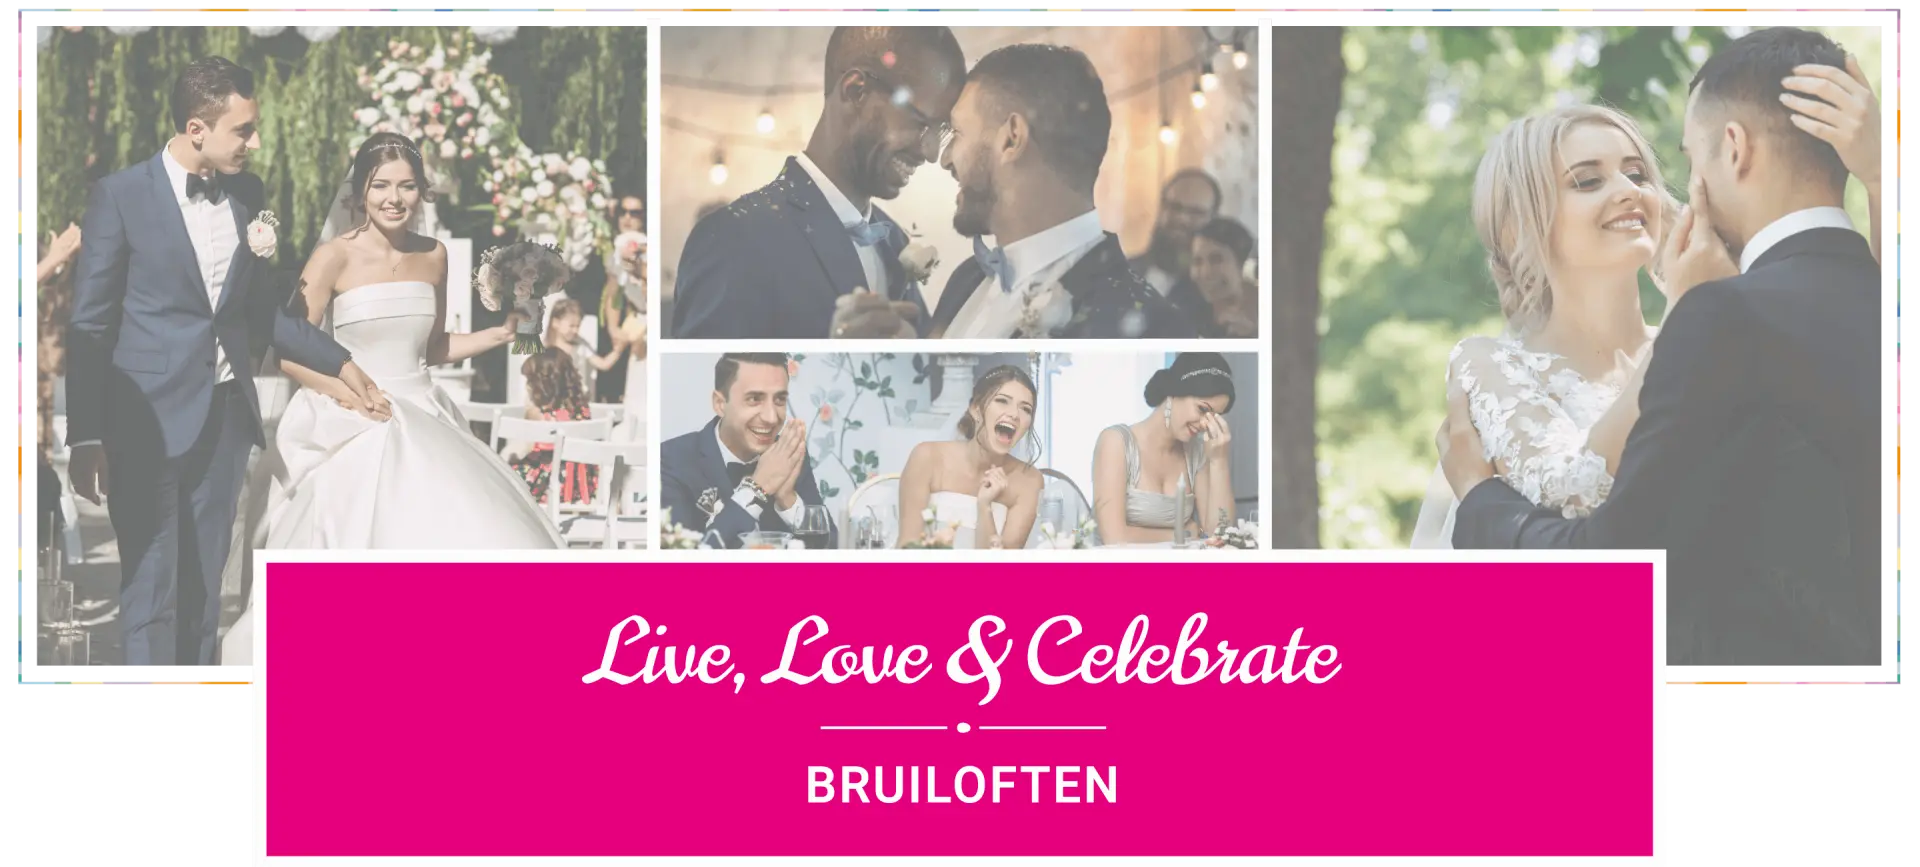 B2B banner vanparys bruiloften mobile